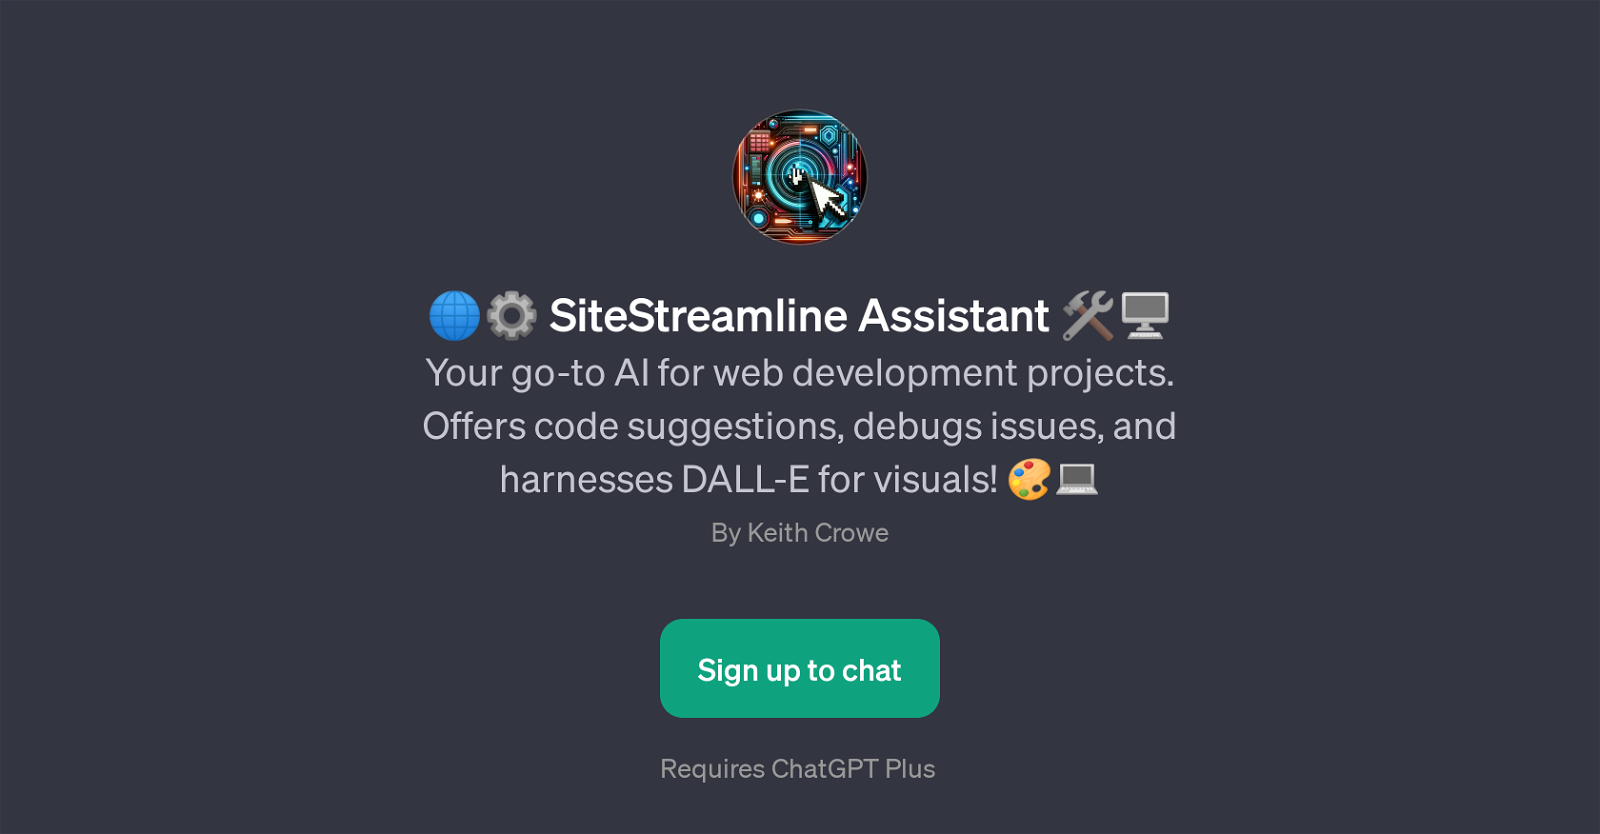 SiteStreamline Assistant website